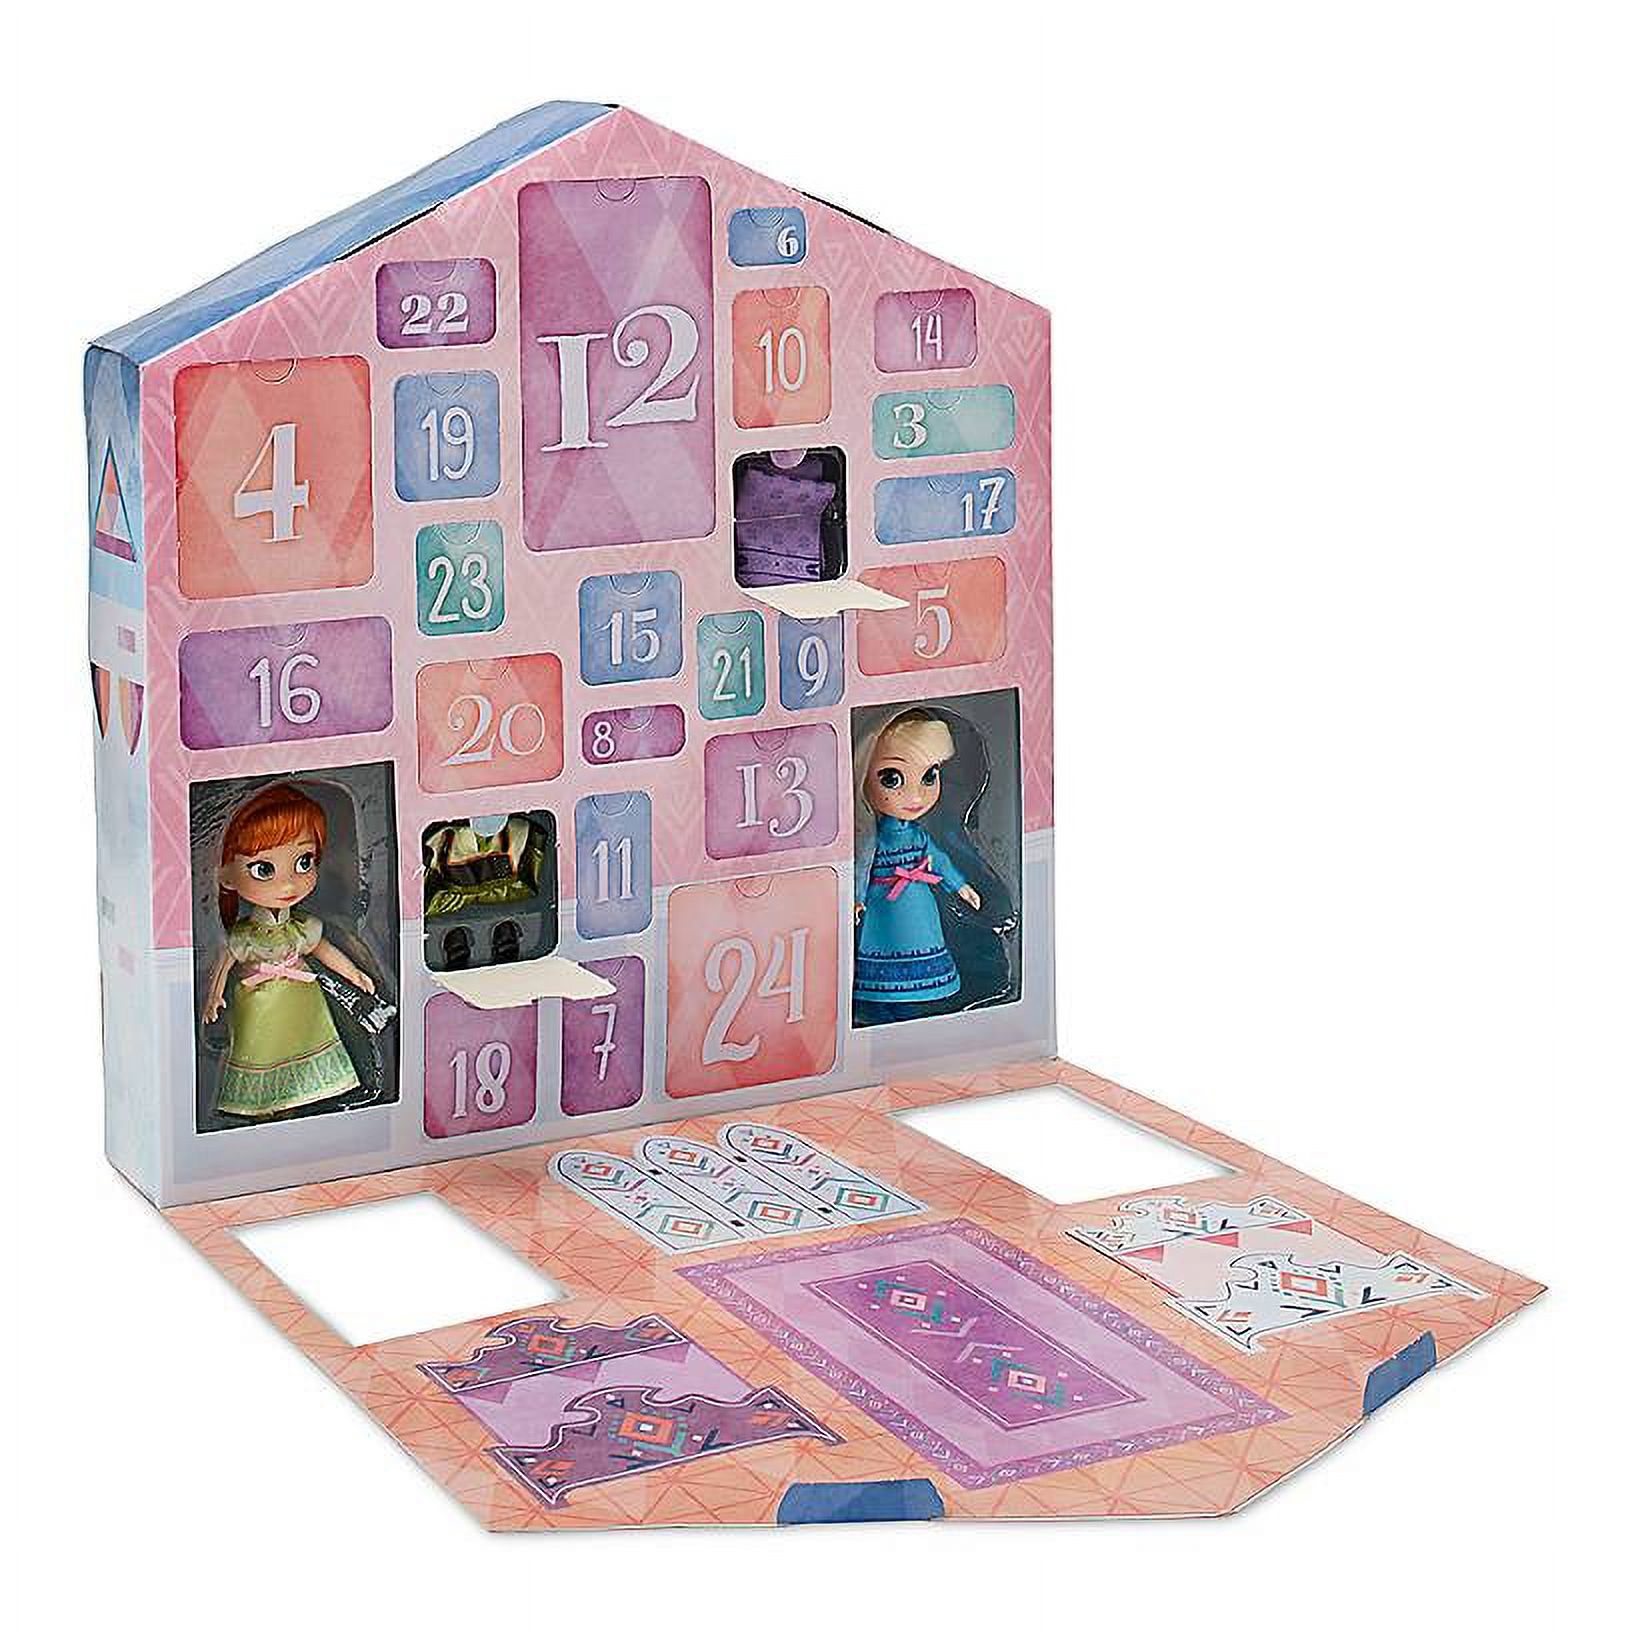 Disney Store Elsa Anna Frozen 2 Advent Calendar New with Box - image 4 of 4